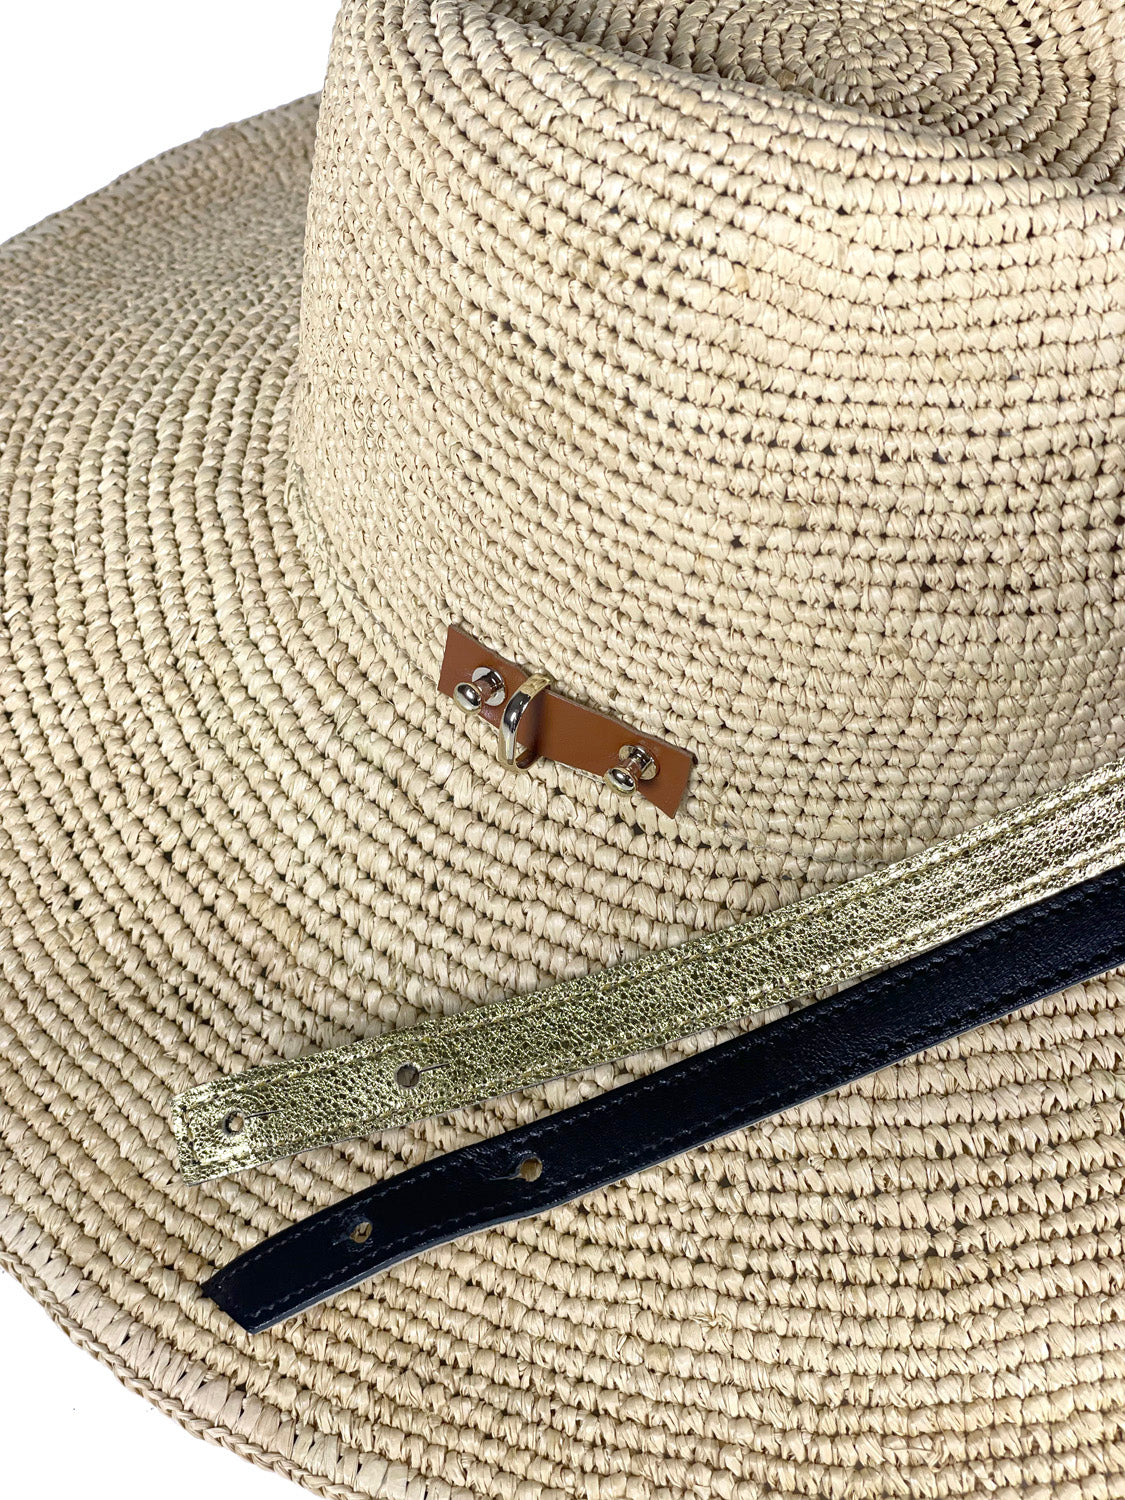 Natural Raffia Fedora Hat